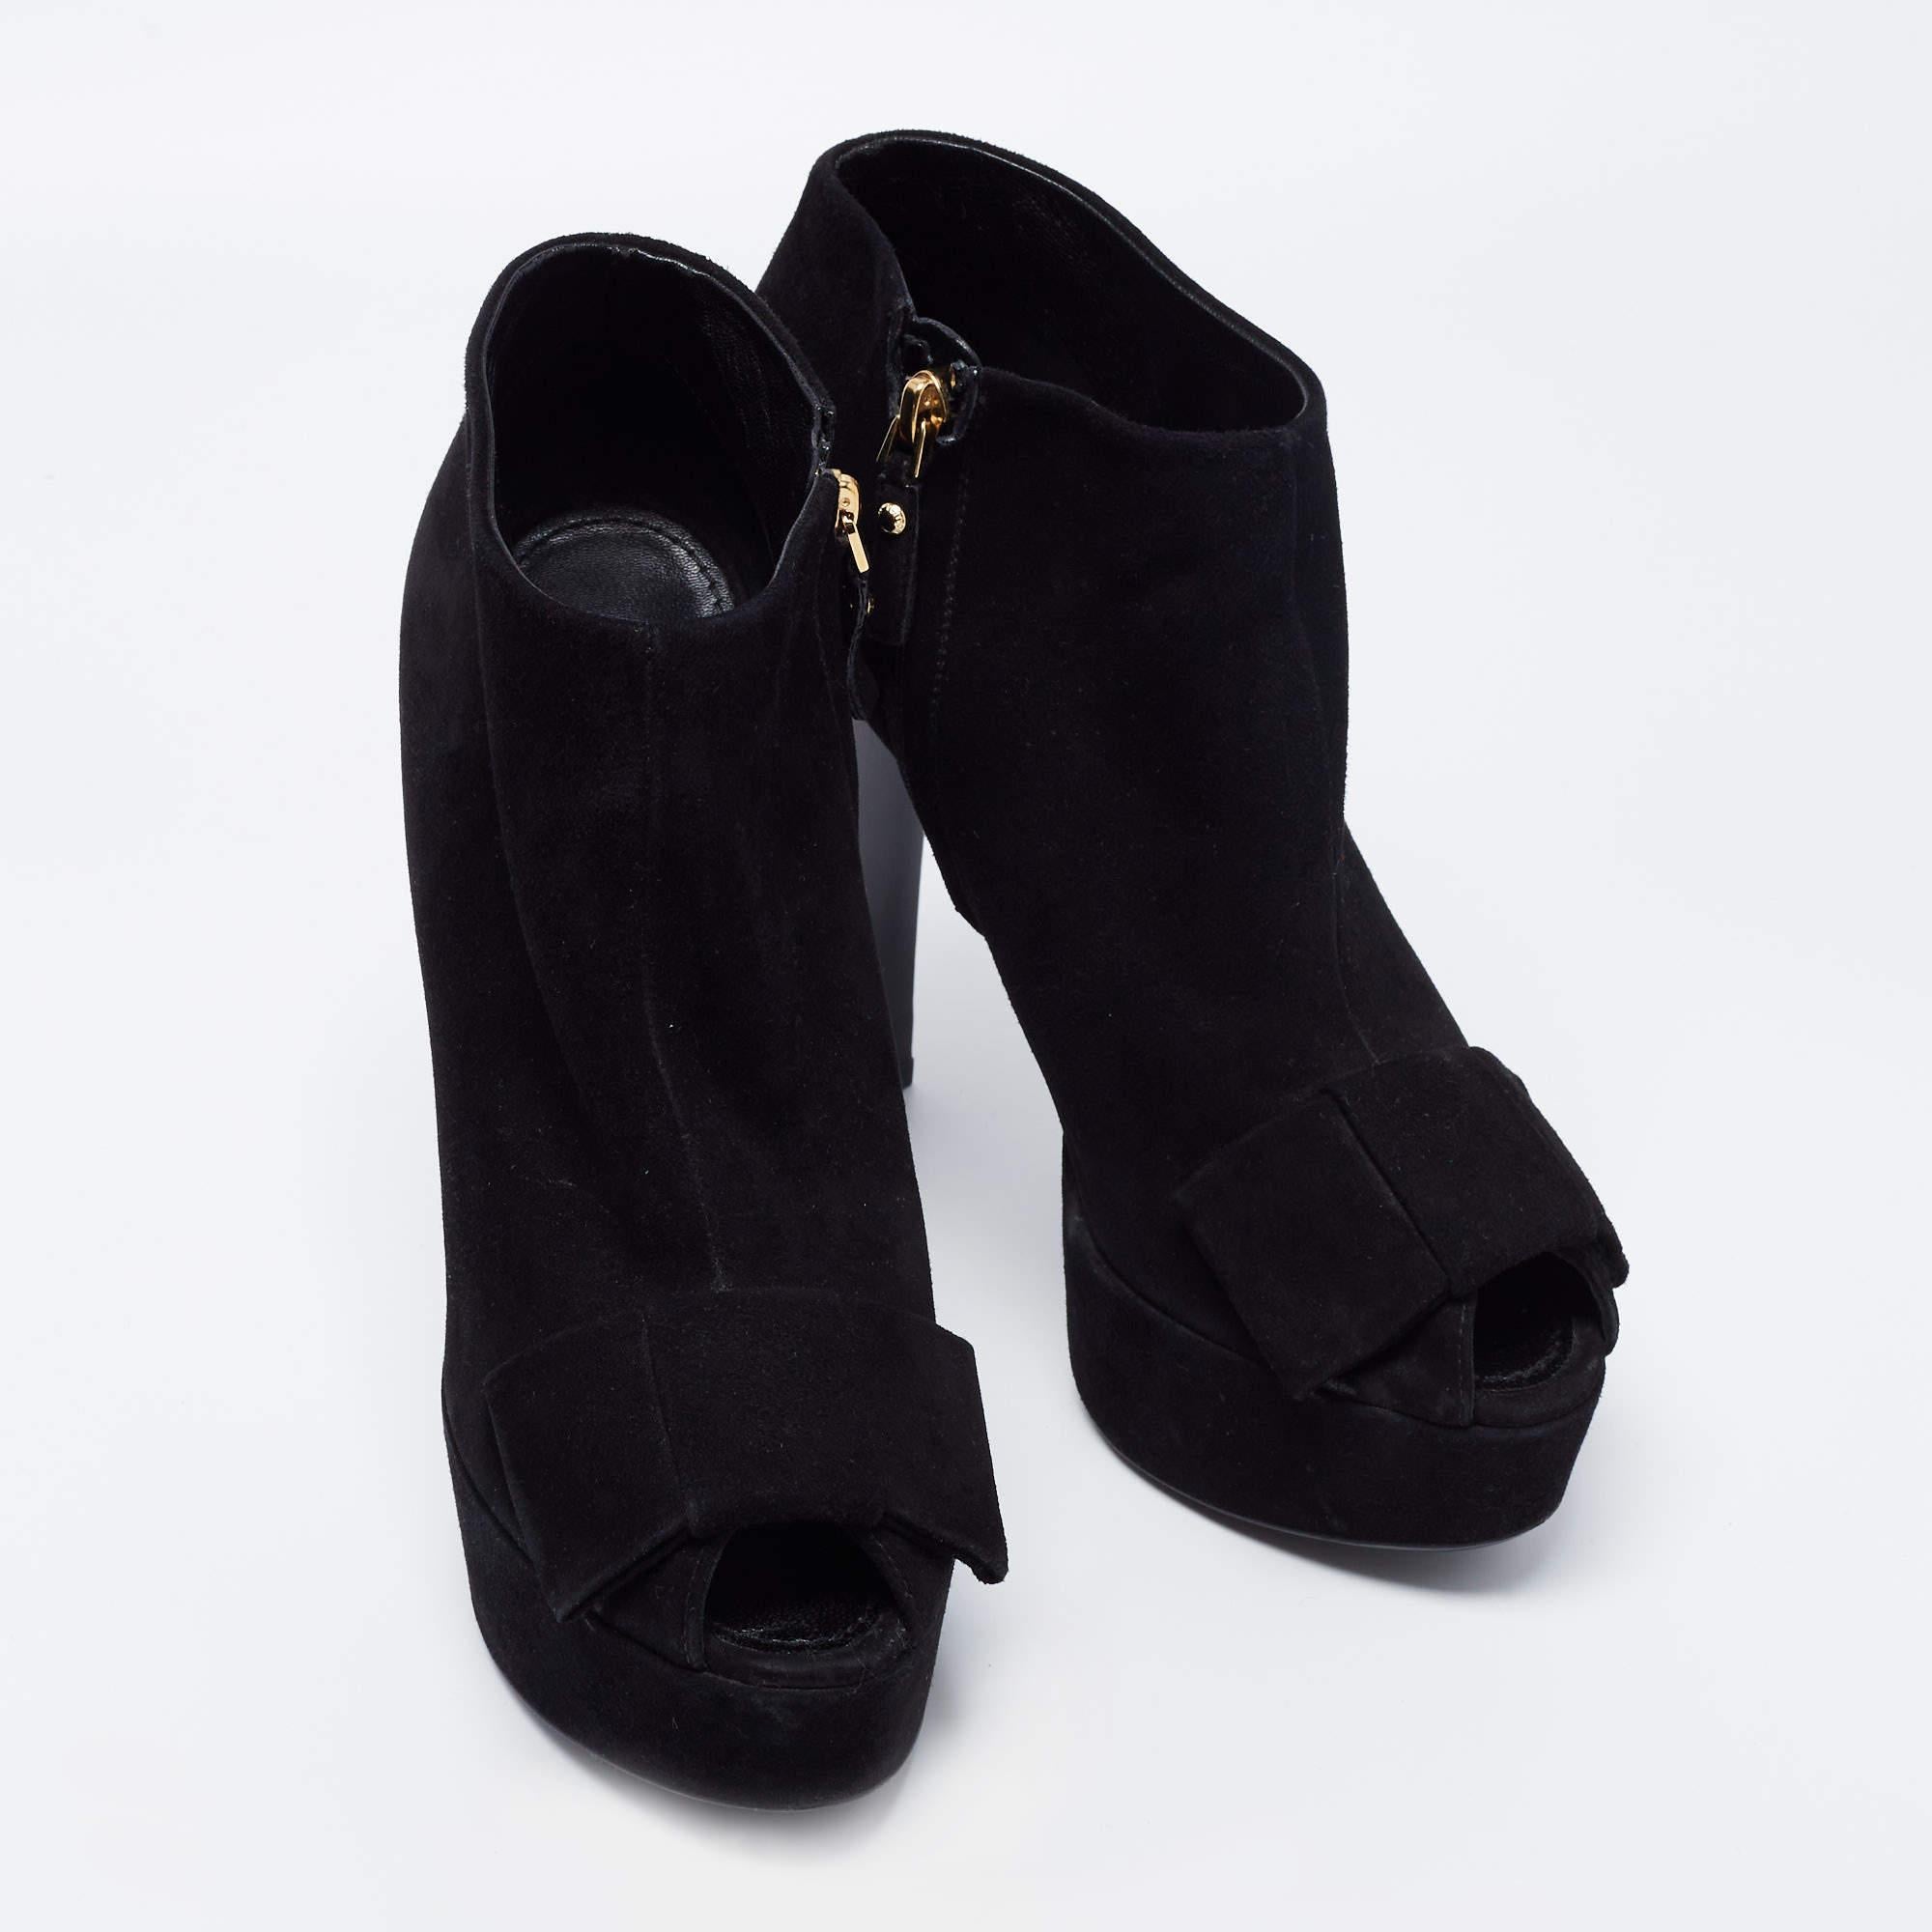 Louis Vuitton Black Suede Bow Peep Toe Ankle Booties Size 36.5 In Good Condition For Sale In Dubai, Al Qouz 2